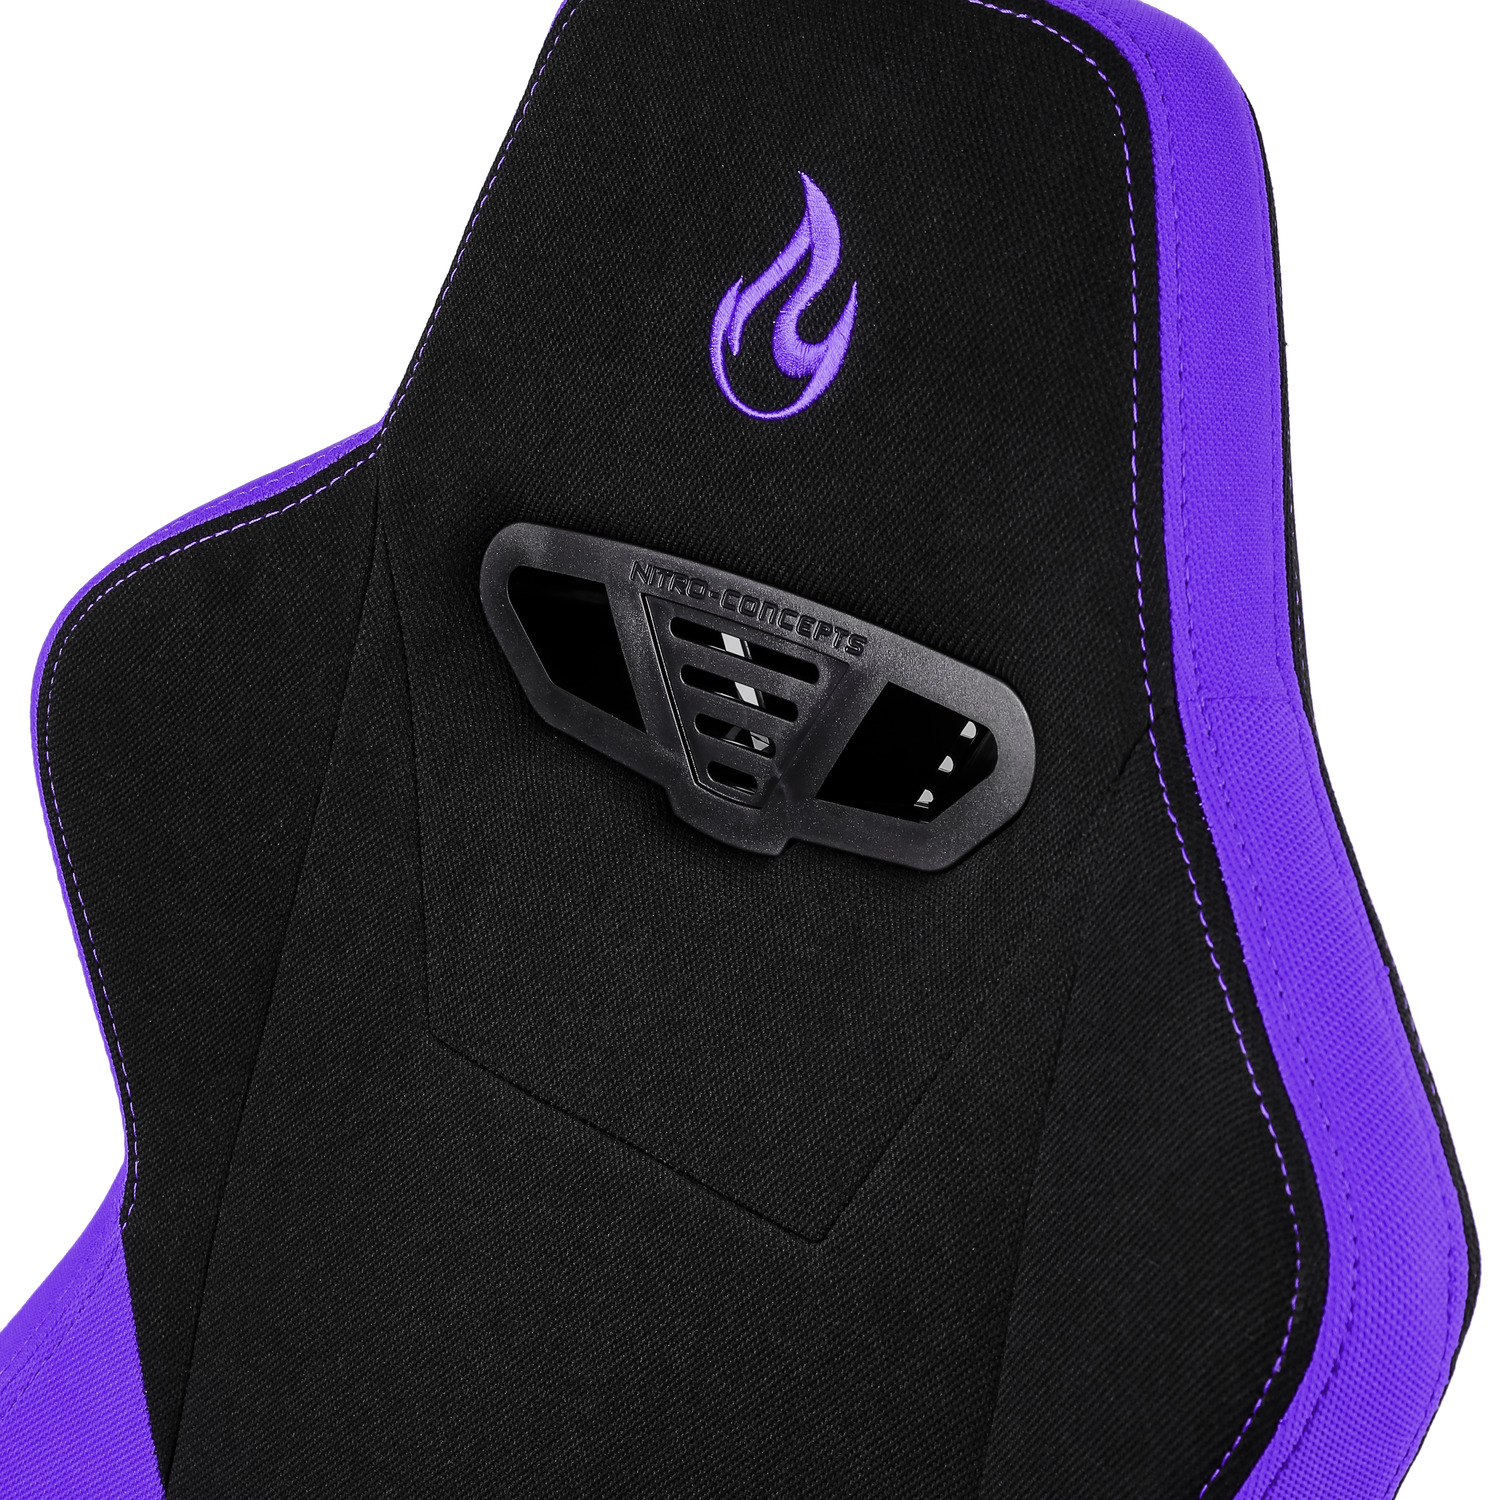 nitro-concepts - S300 Gaming Chair Nebula Purple